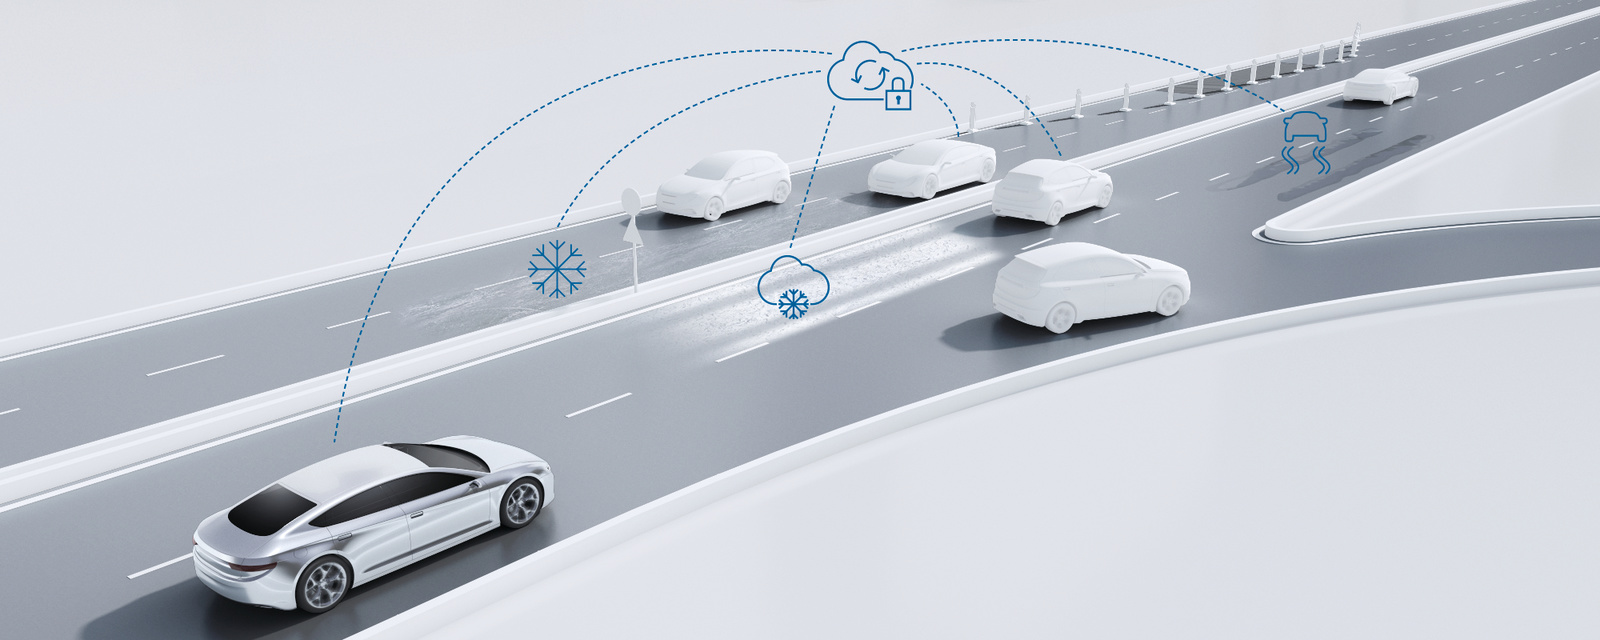 Predictive road-condition services from Bosch